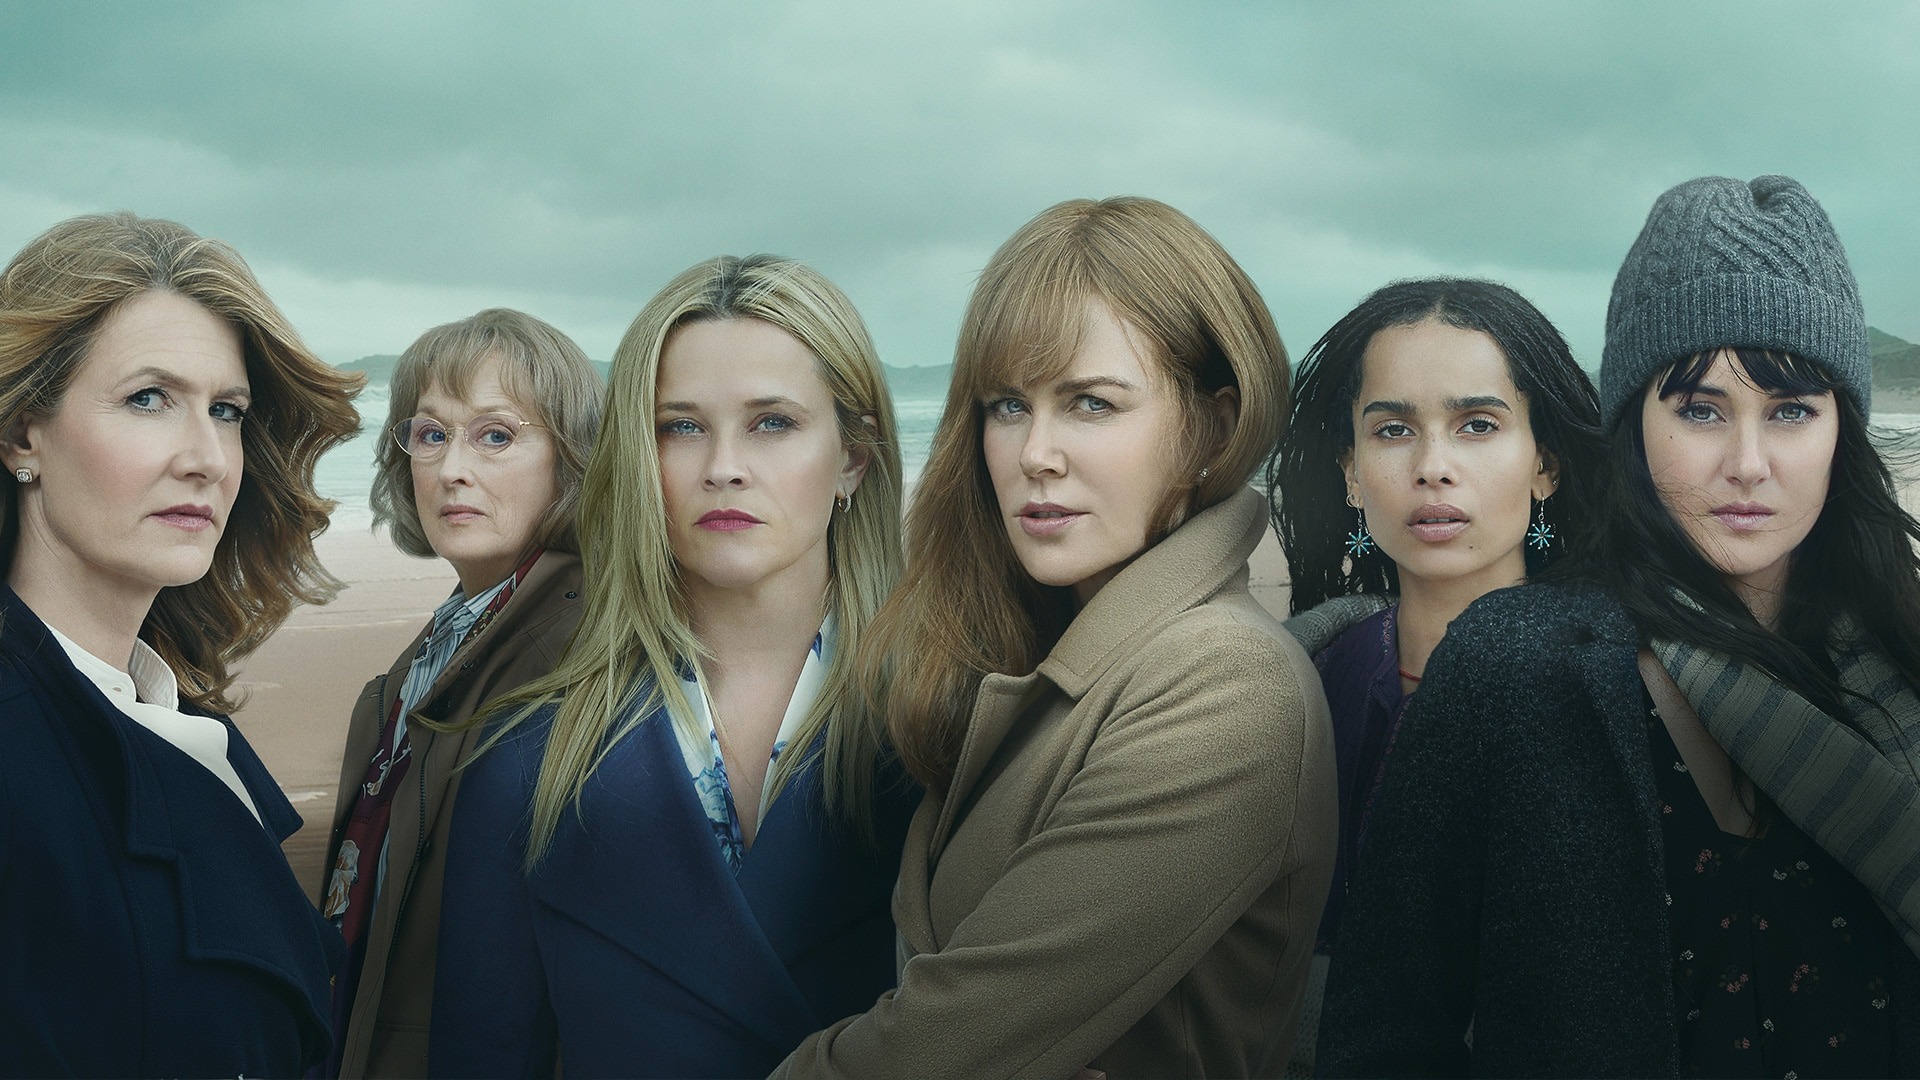 #Big Little Lies: Season Three of HBO Series Is Happening According to Nicole Kidman